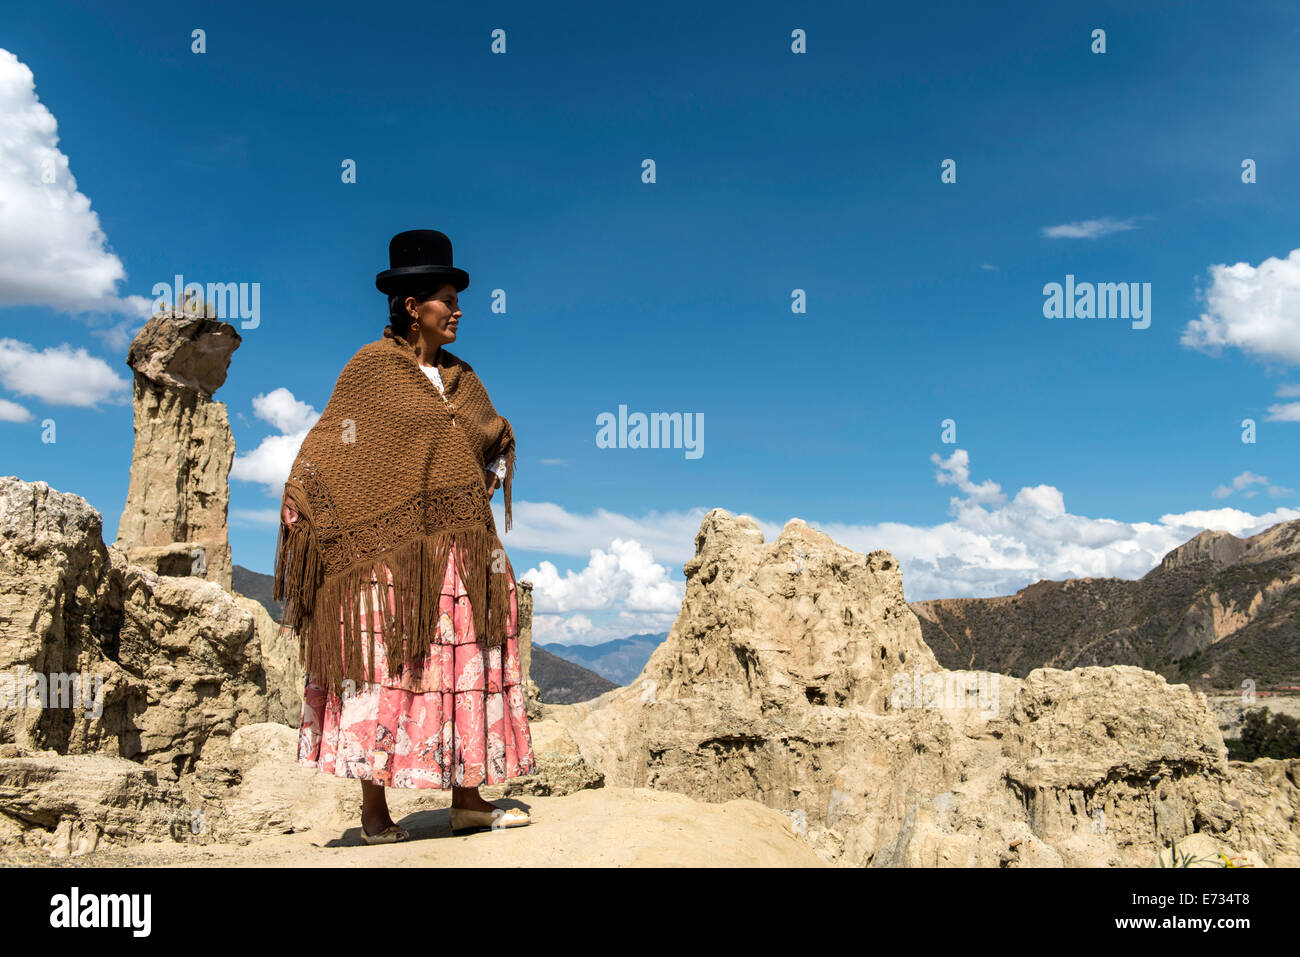 Bolivianische Frau in Tracht am geologischen Felsformationen Tal des Mondes (Valle De La Luna) Pedro Domingo Bolivia Stockfoto